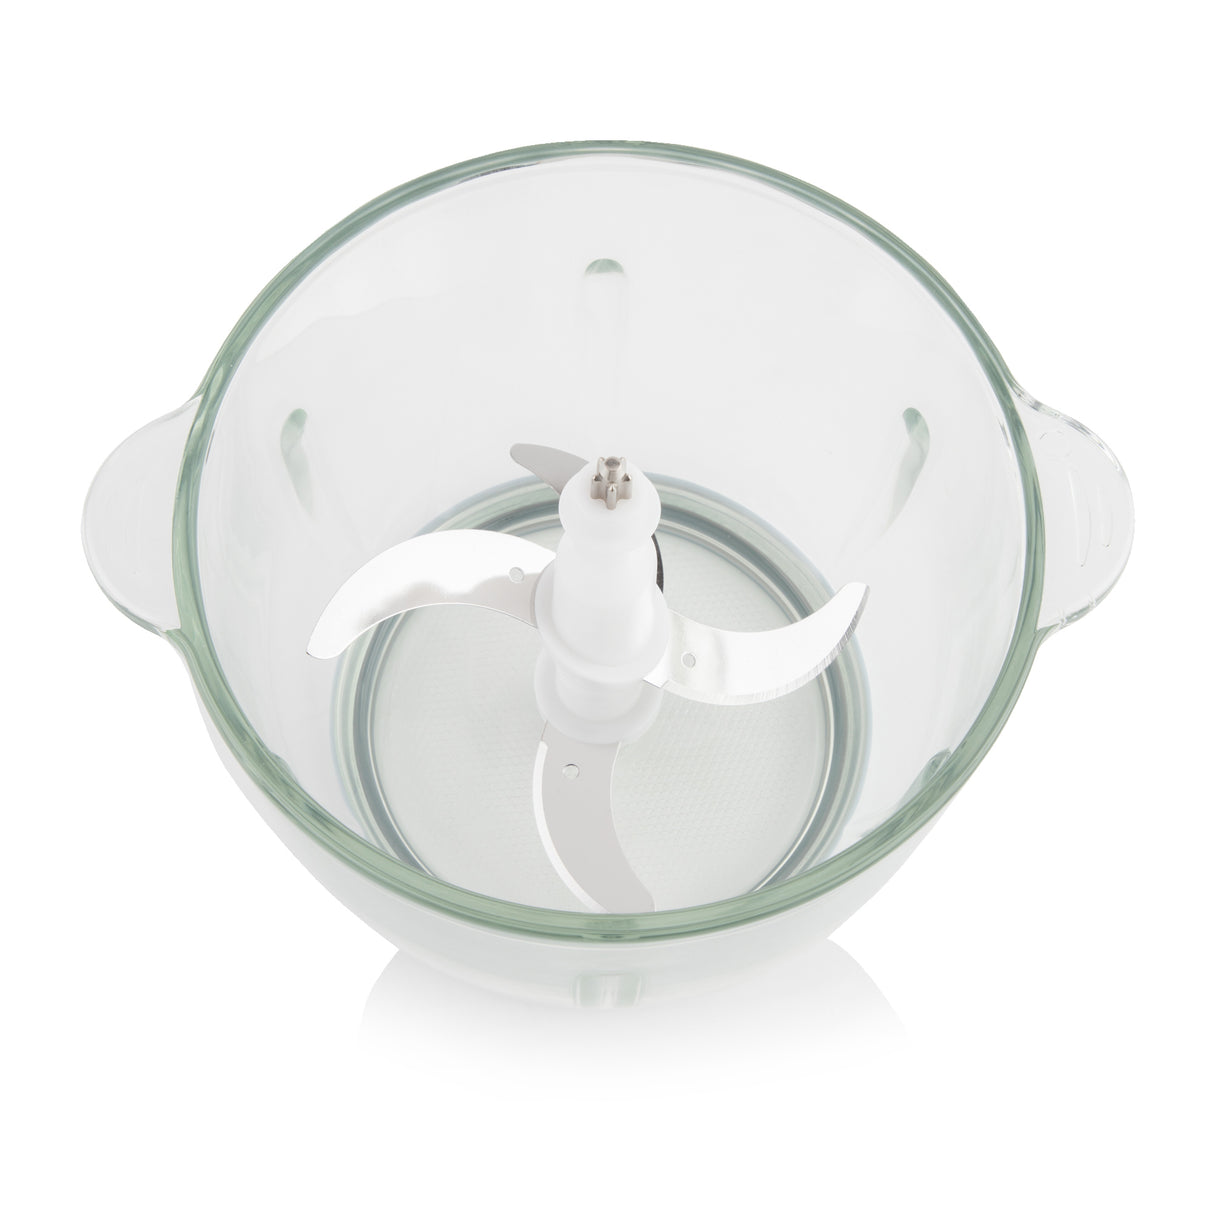 Vitinni Food Processor - Multi-Use Food Chopper with Glass Bowl